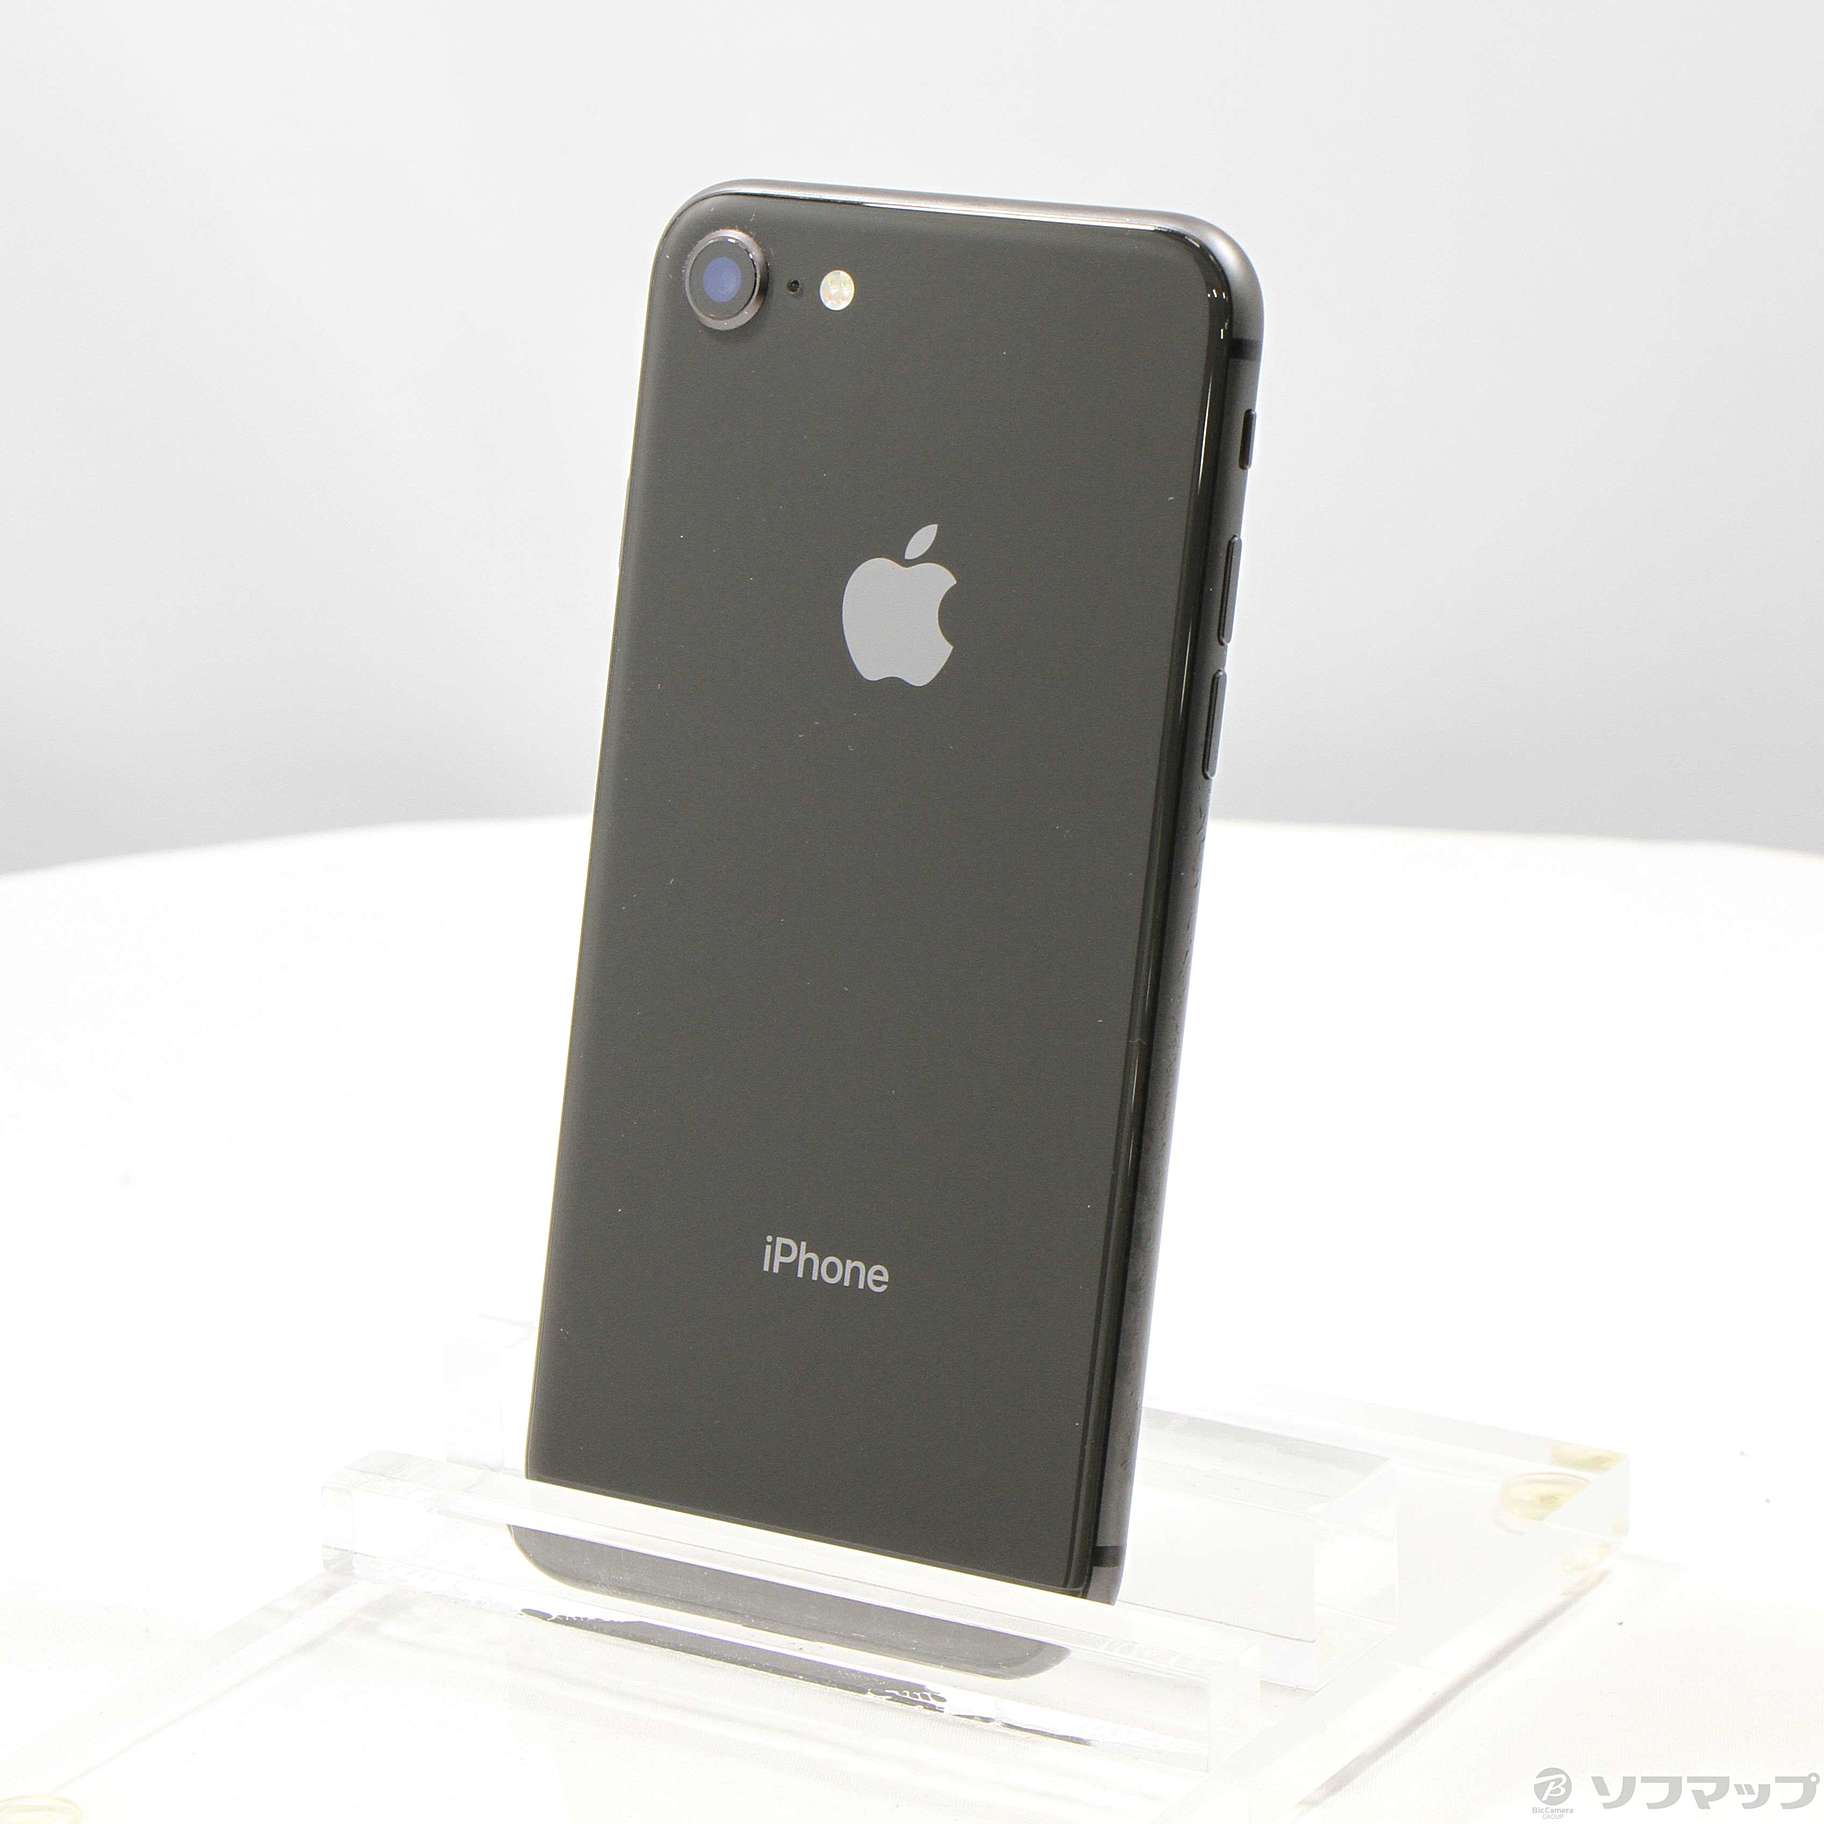 iPhone 8 Space gray 64GB SIMフリー 新品未使用未開封スマートフォン 